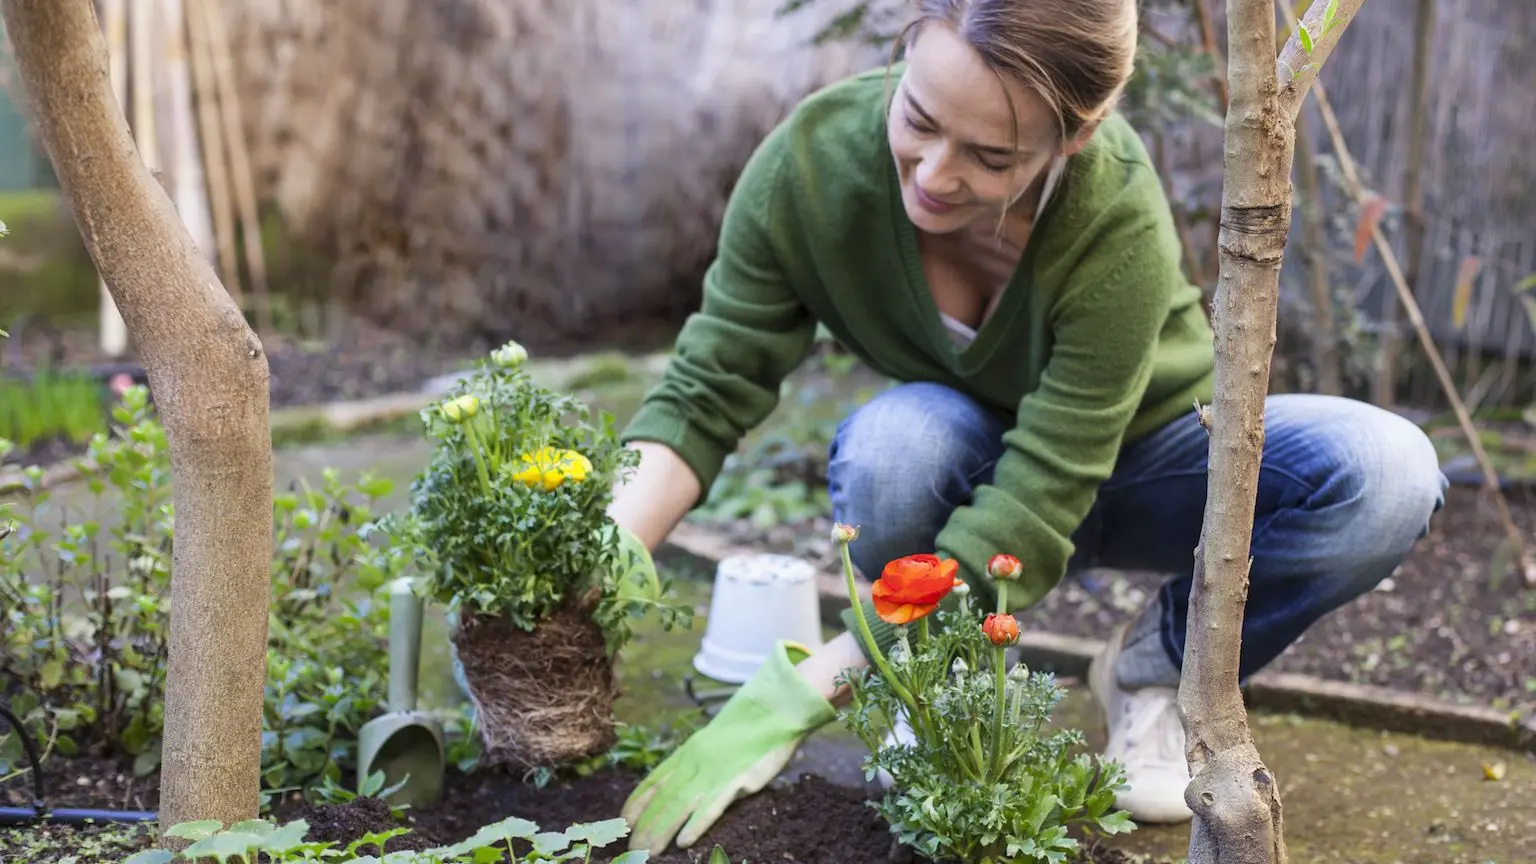 Woman planting flowers in her gardening using gardening tools